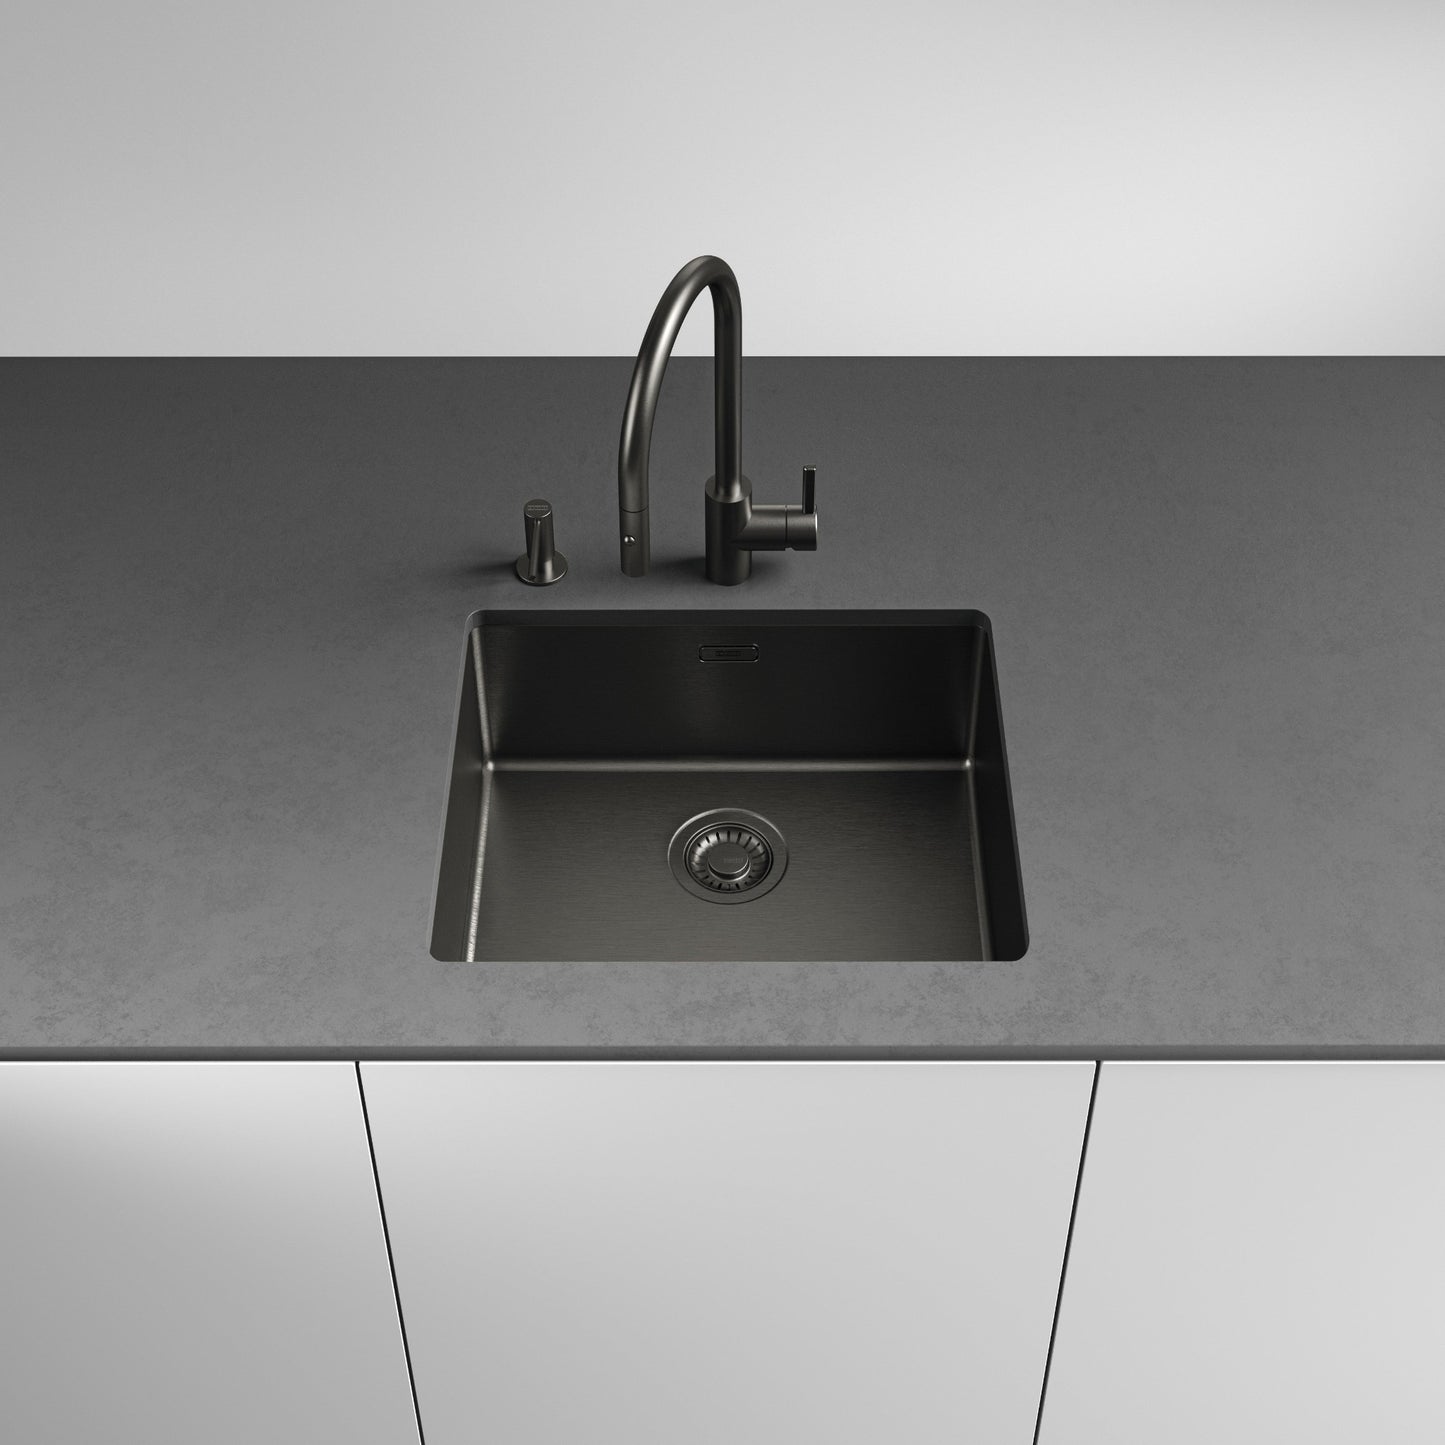 Franke Mythos Masterpiece BXM 210/110-50 Single Bowl Undermount Kitchen Sink Anthracite alongside balck tap and accessories